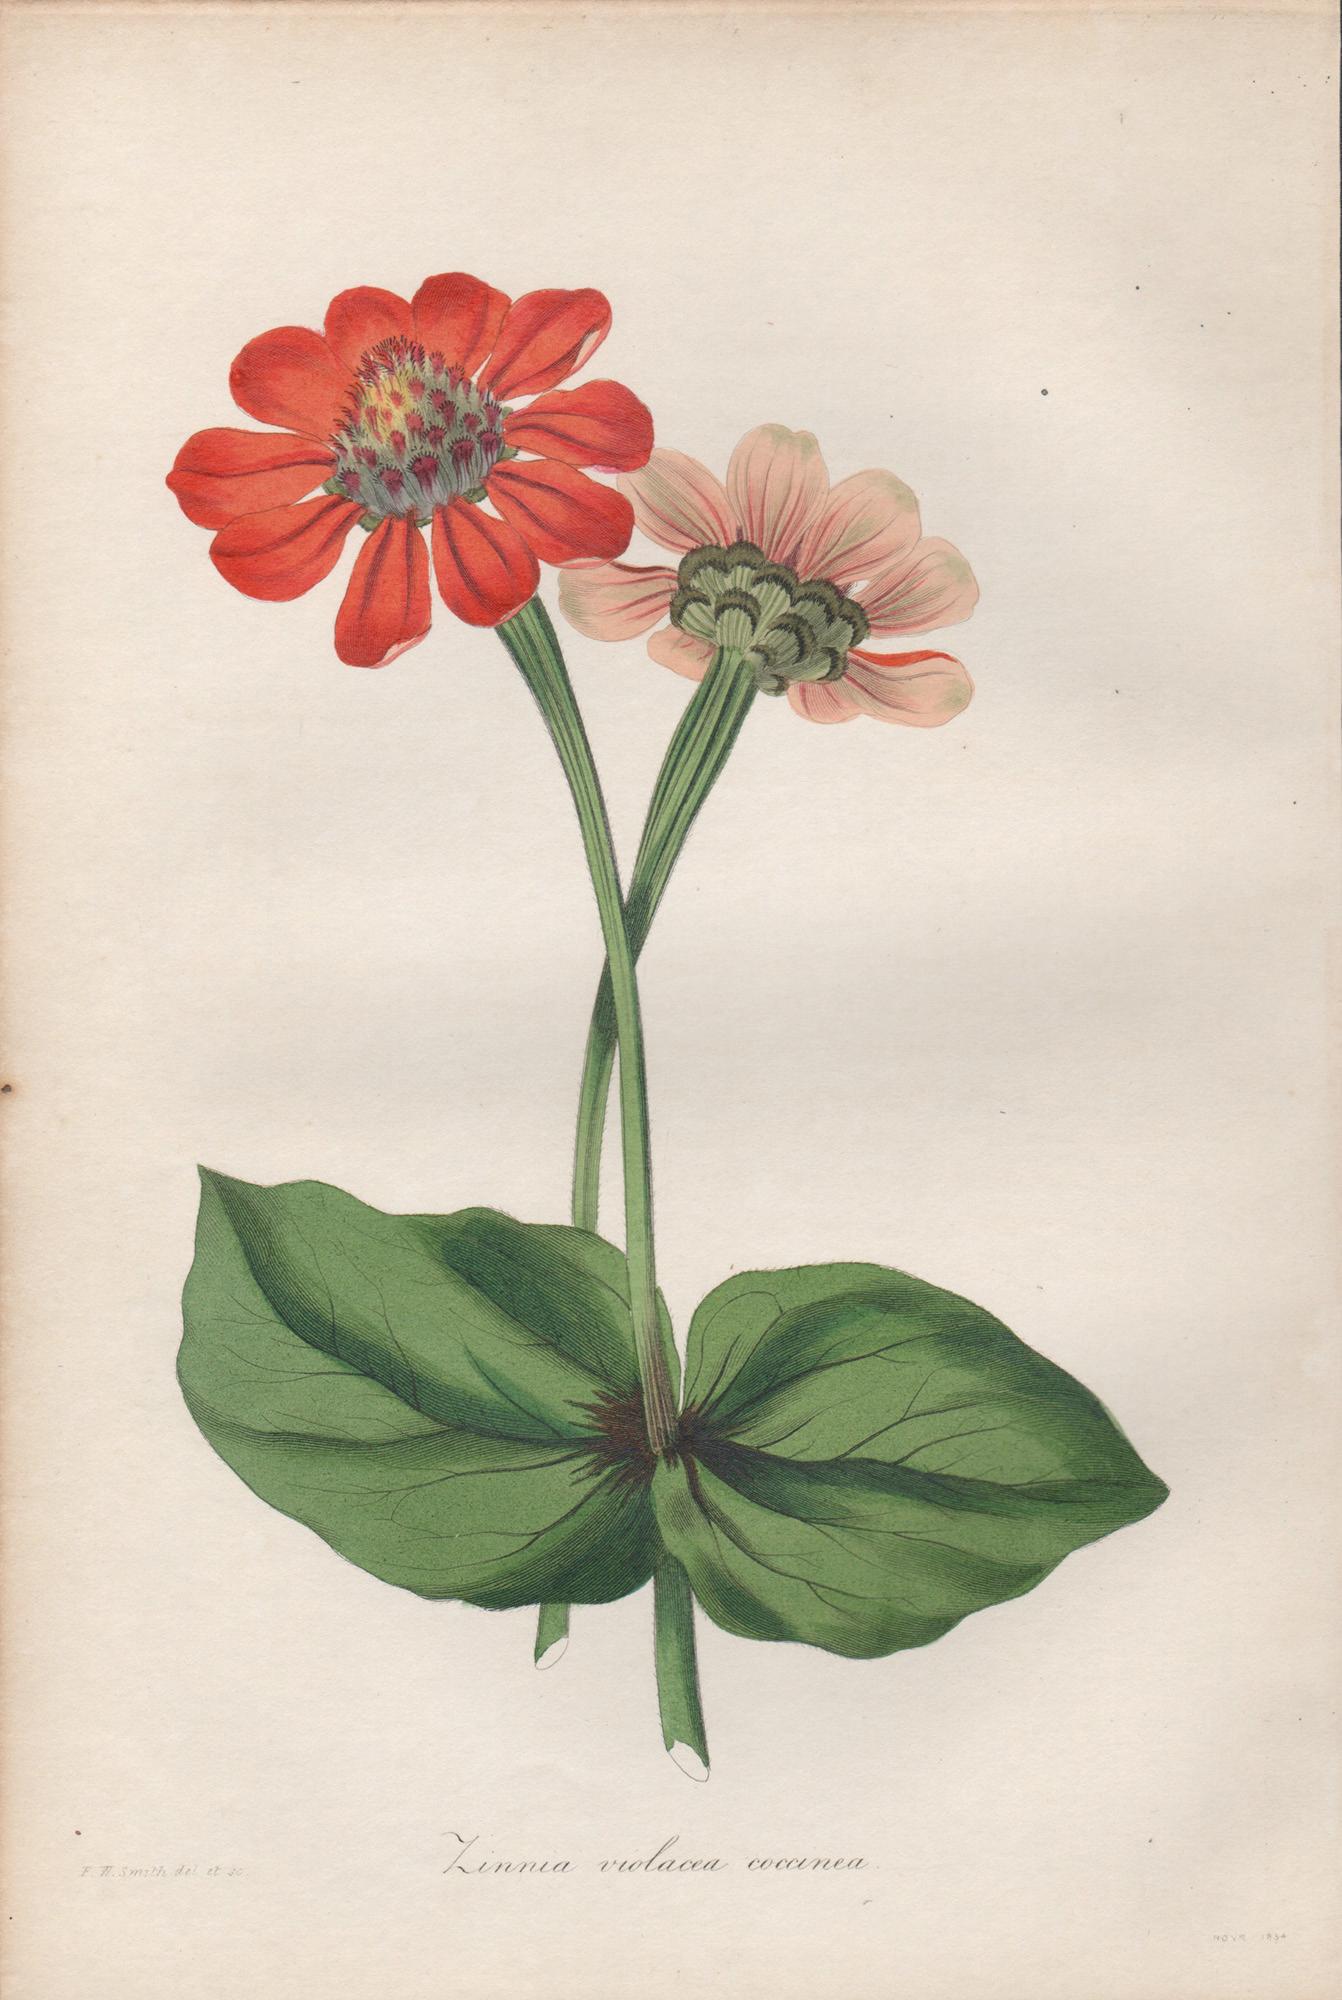 Frederick William Smith Print - Zinnea violacea coccinea, antique botanical red flower engraving